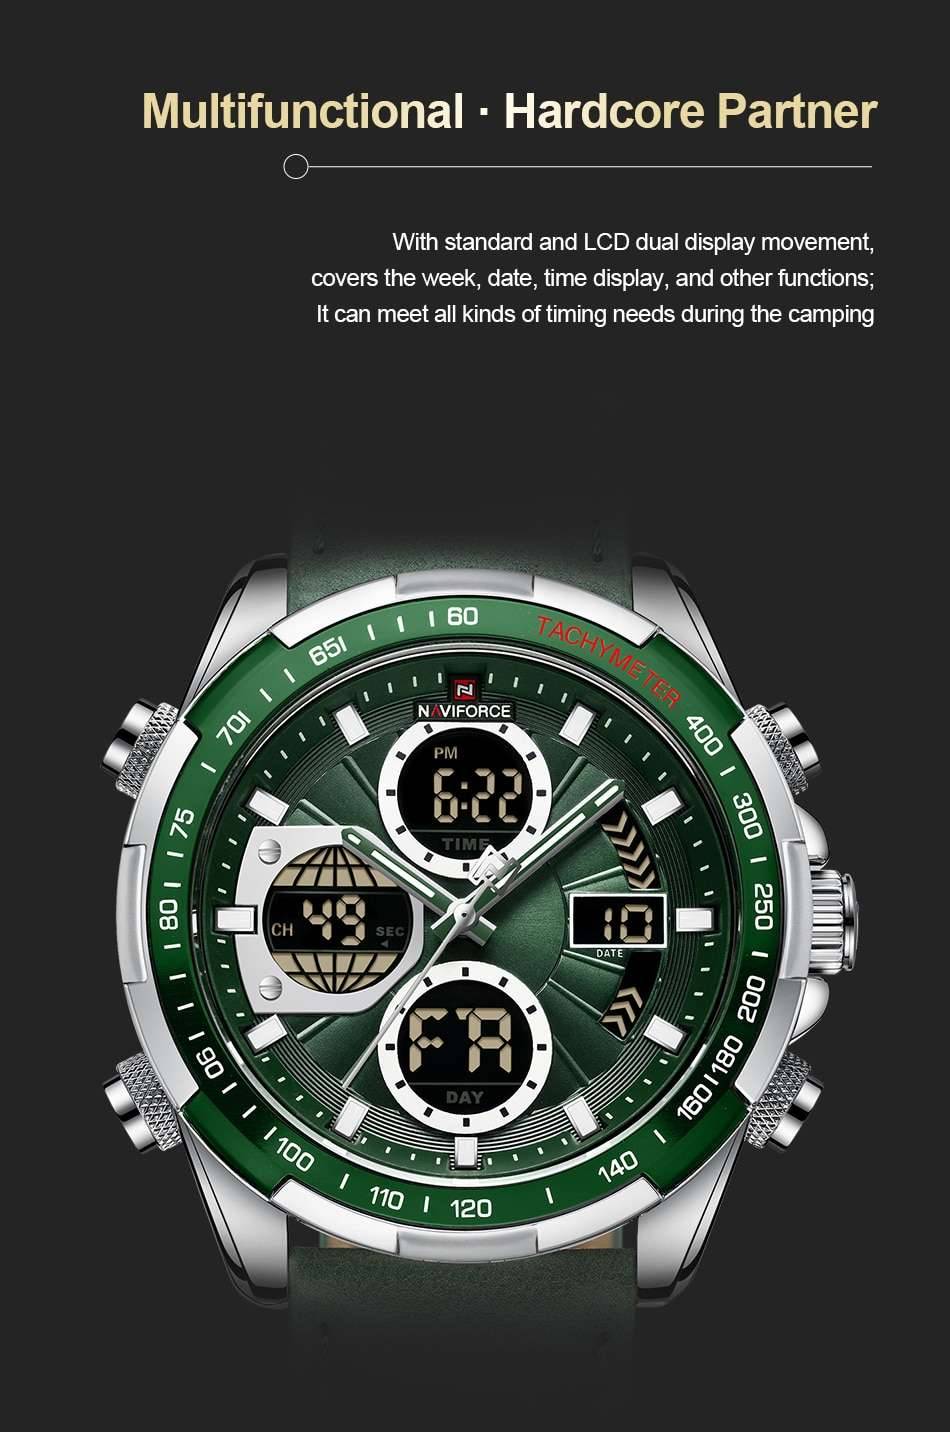 New NAVIFORCE Military Watches for Men Luxury Sport Chronograph Alarm WristWatch ​Waterproof Quartz Big Clock Digital Male Watch